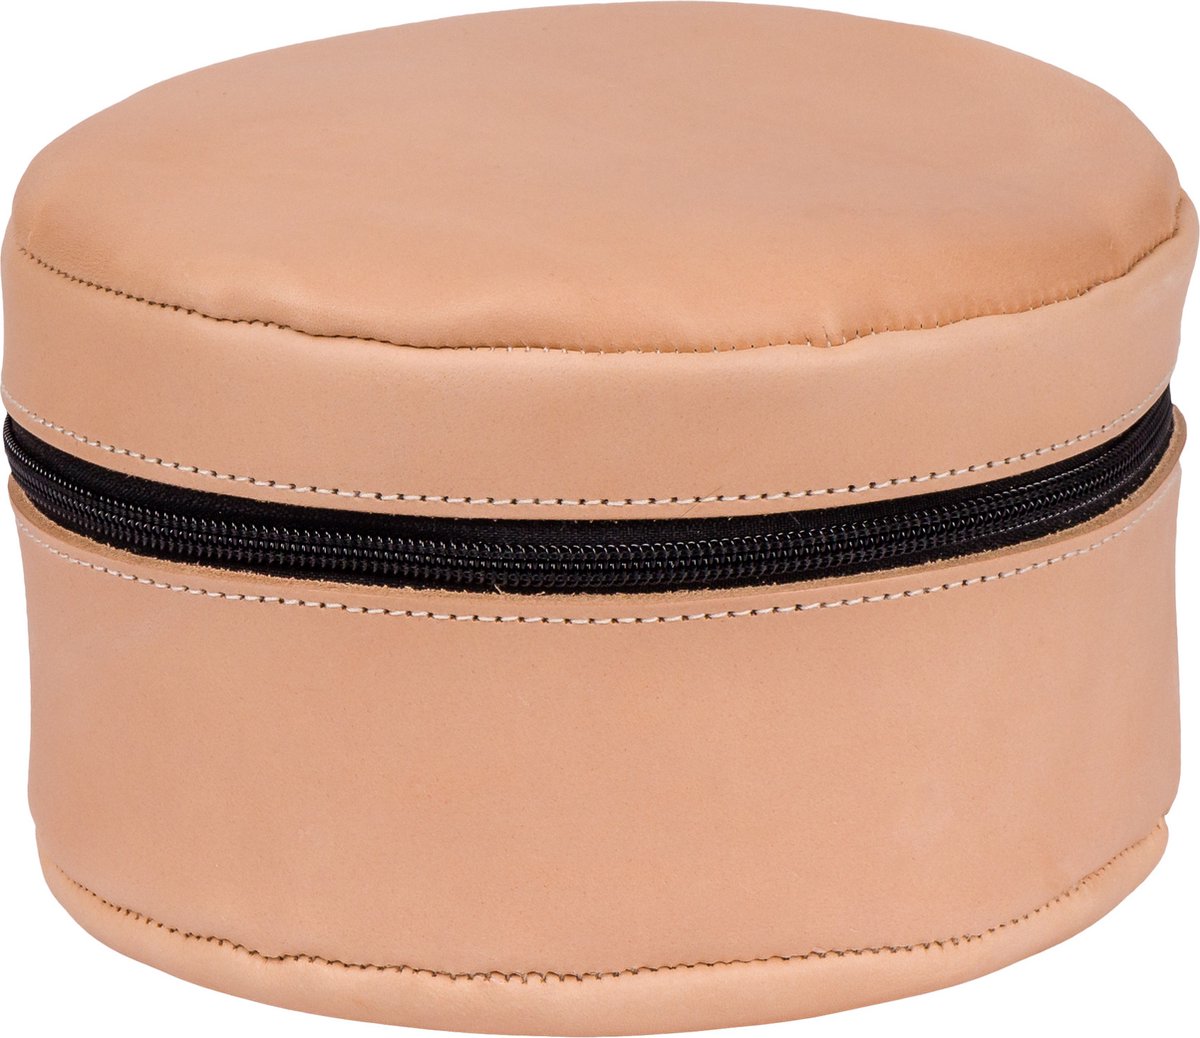 Leather Case - Trangia Stove 25 Large